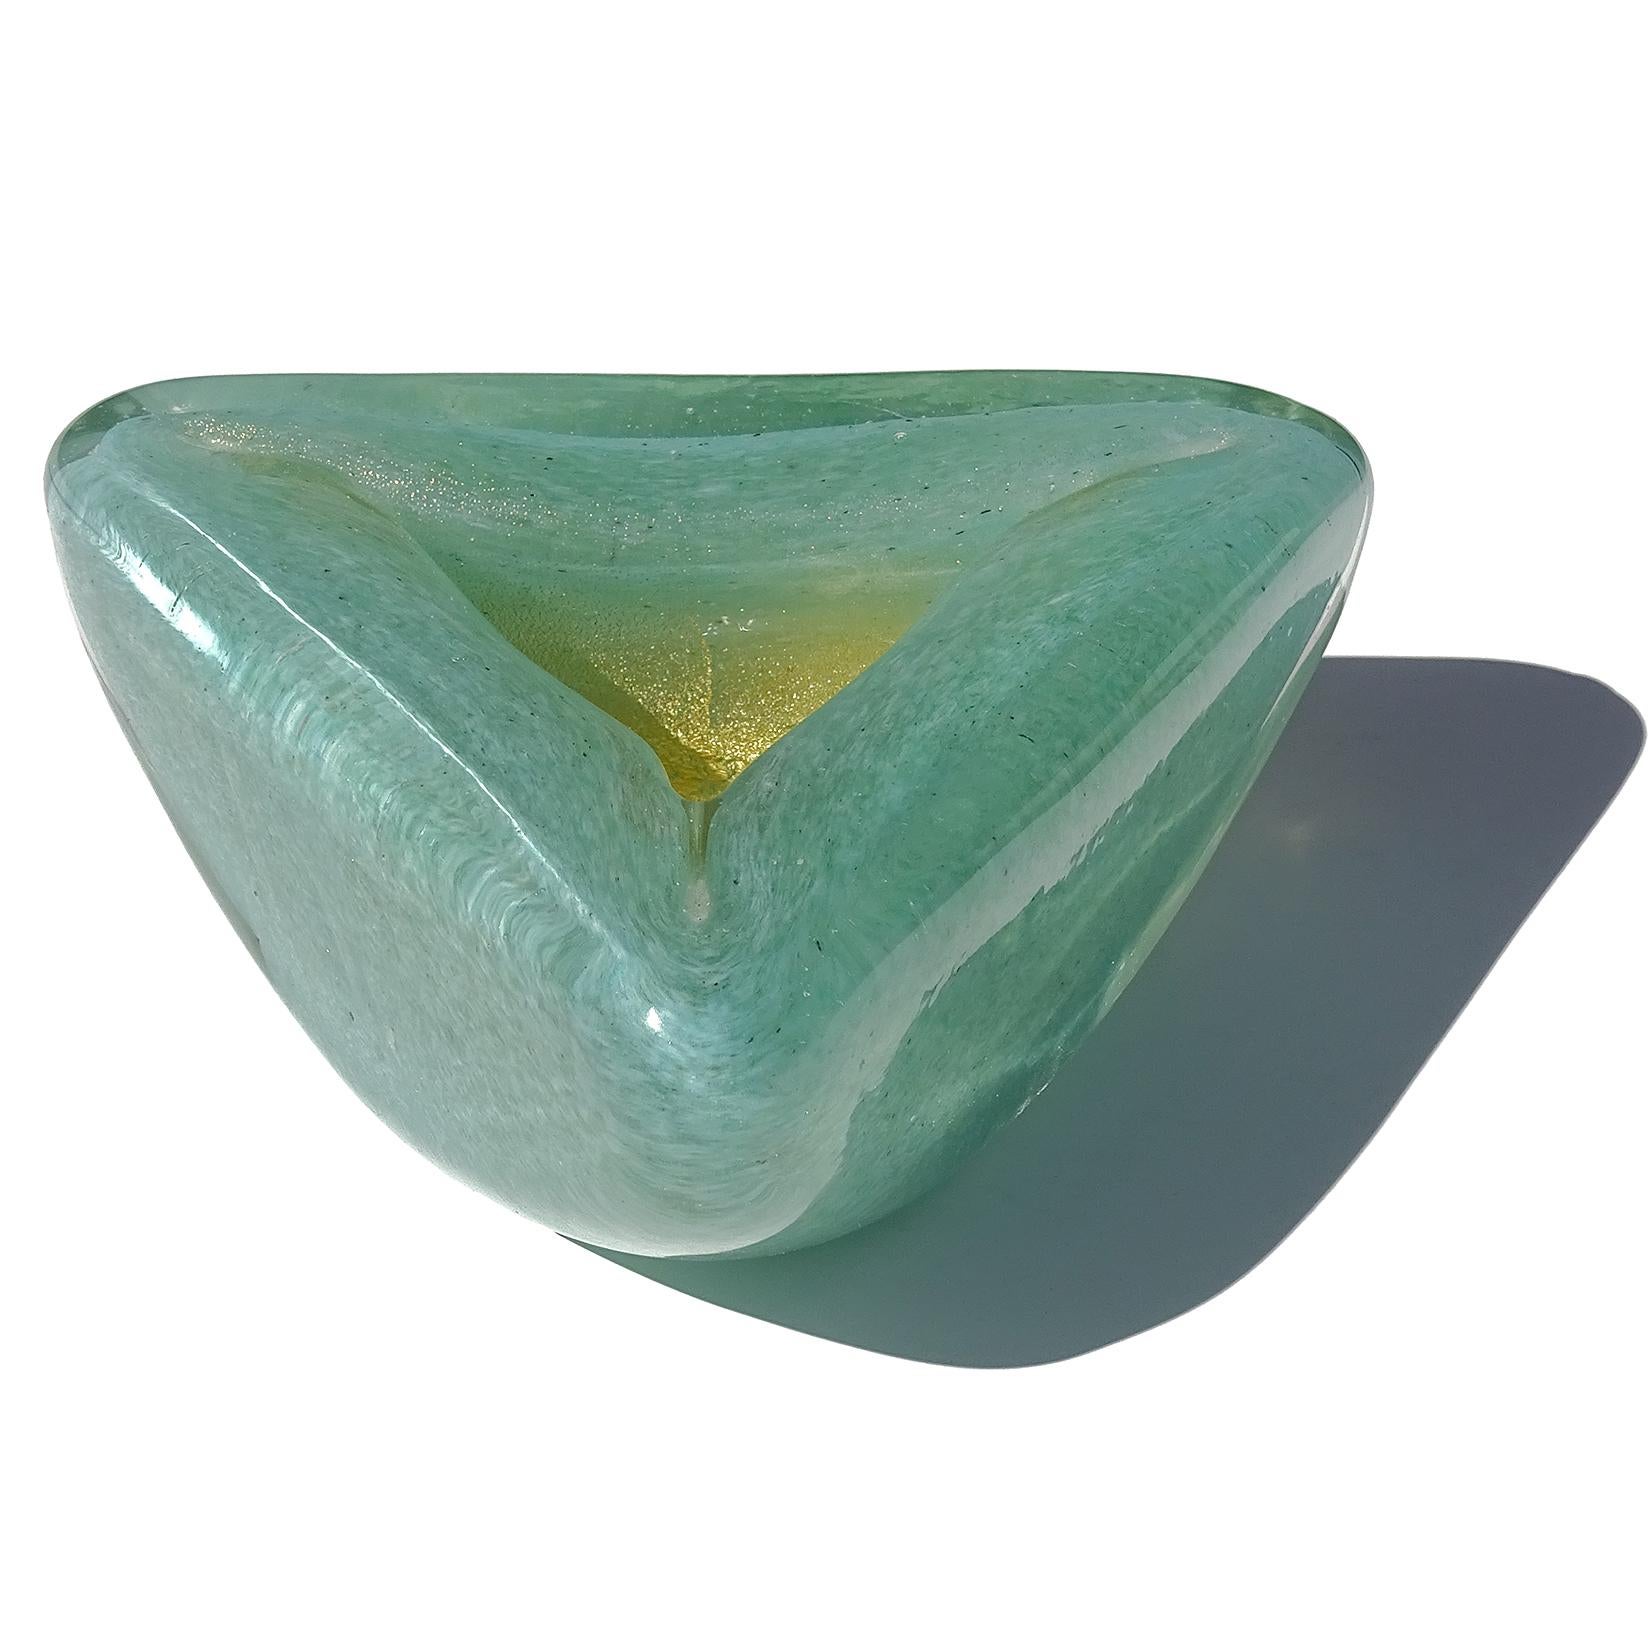 Hand-Crafted Barovier Toso Murano Jade Green Gold Flecks Italian Art Glass Triangle Bowl